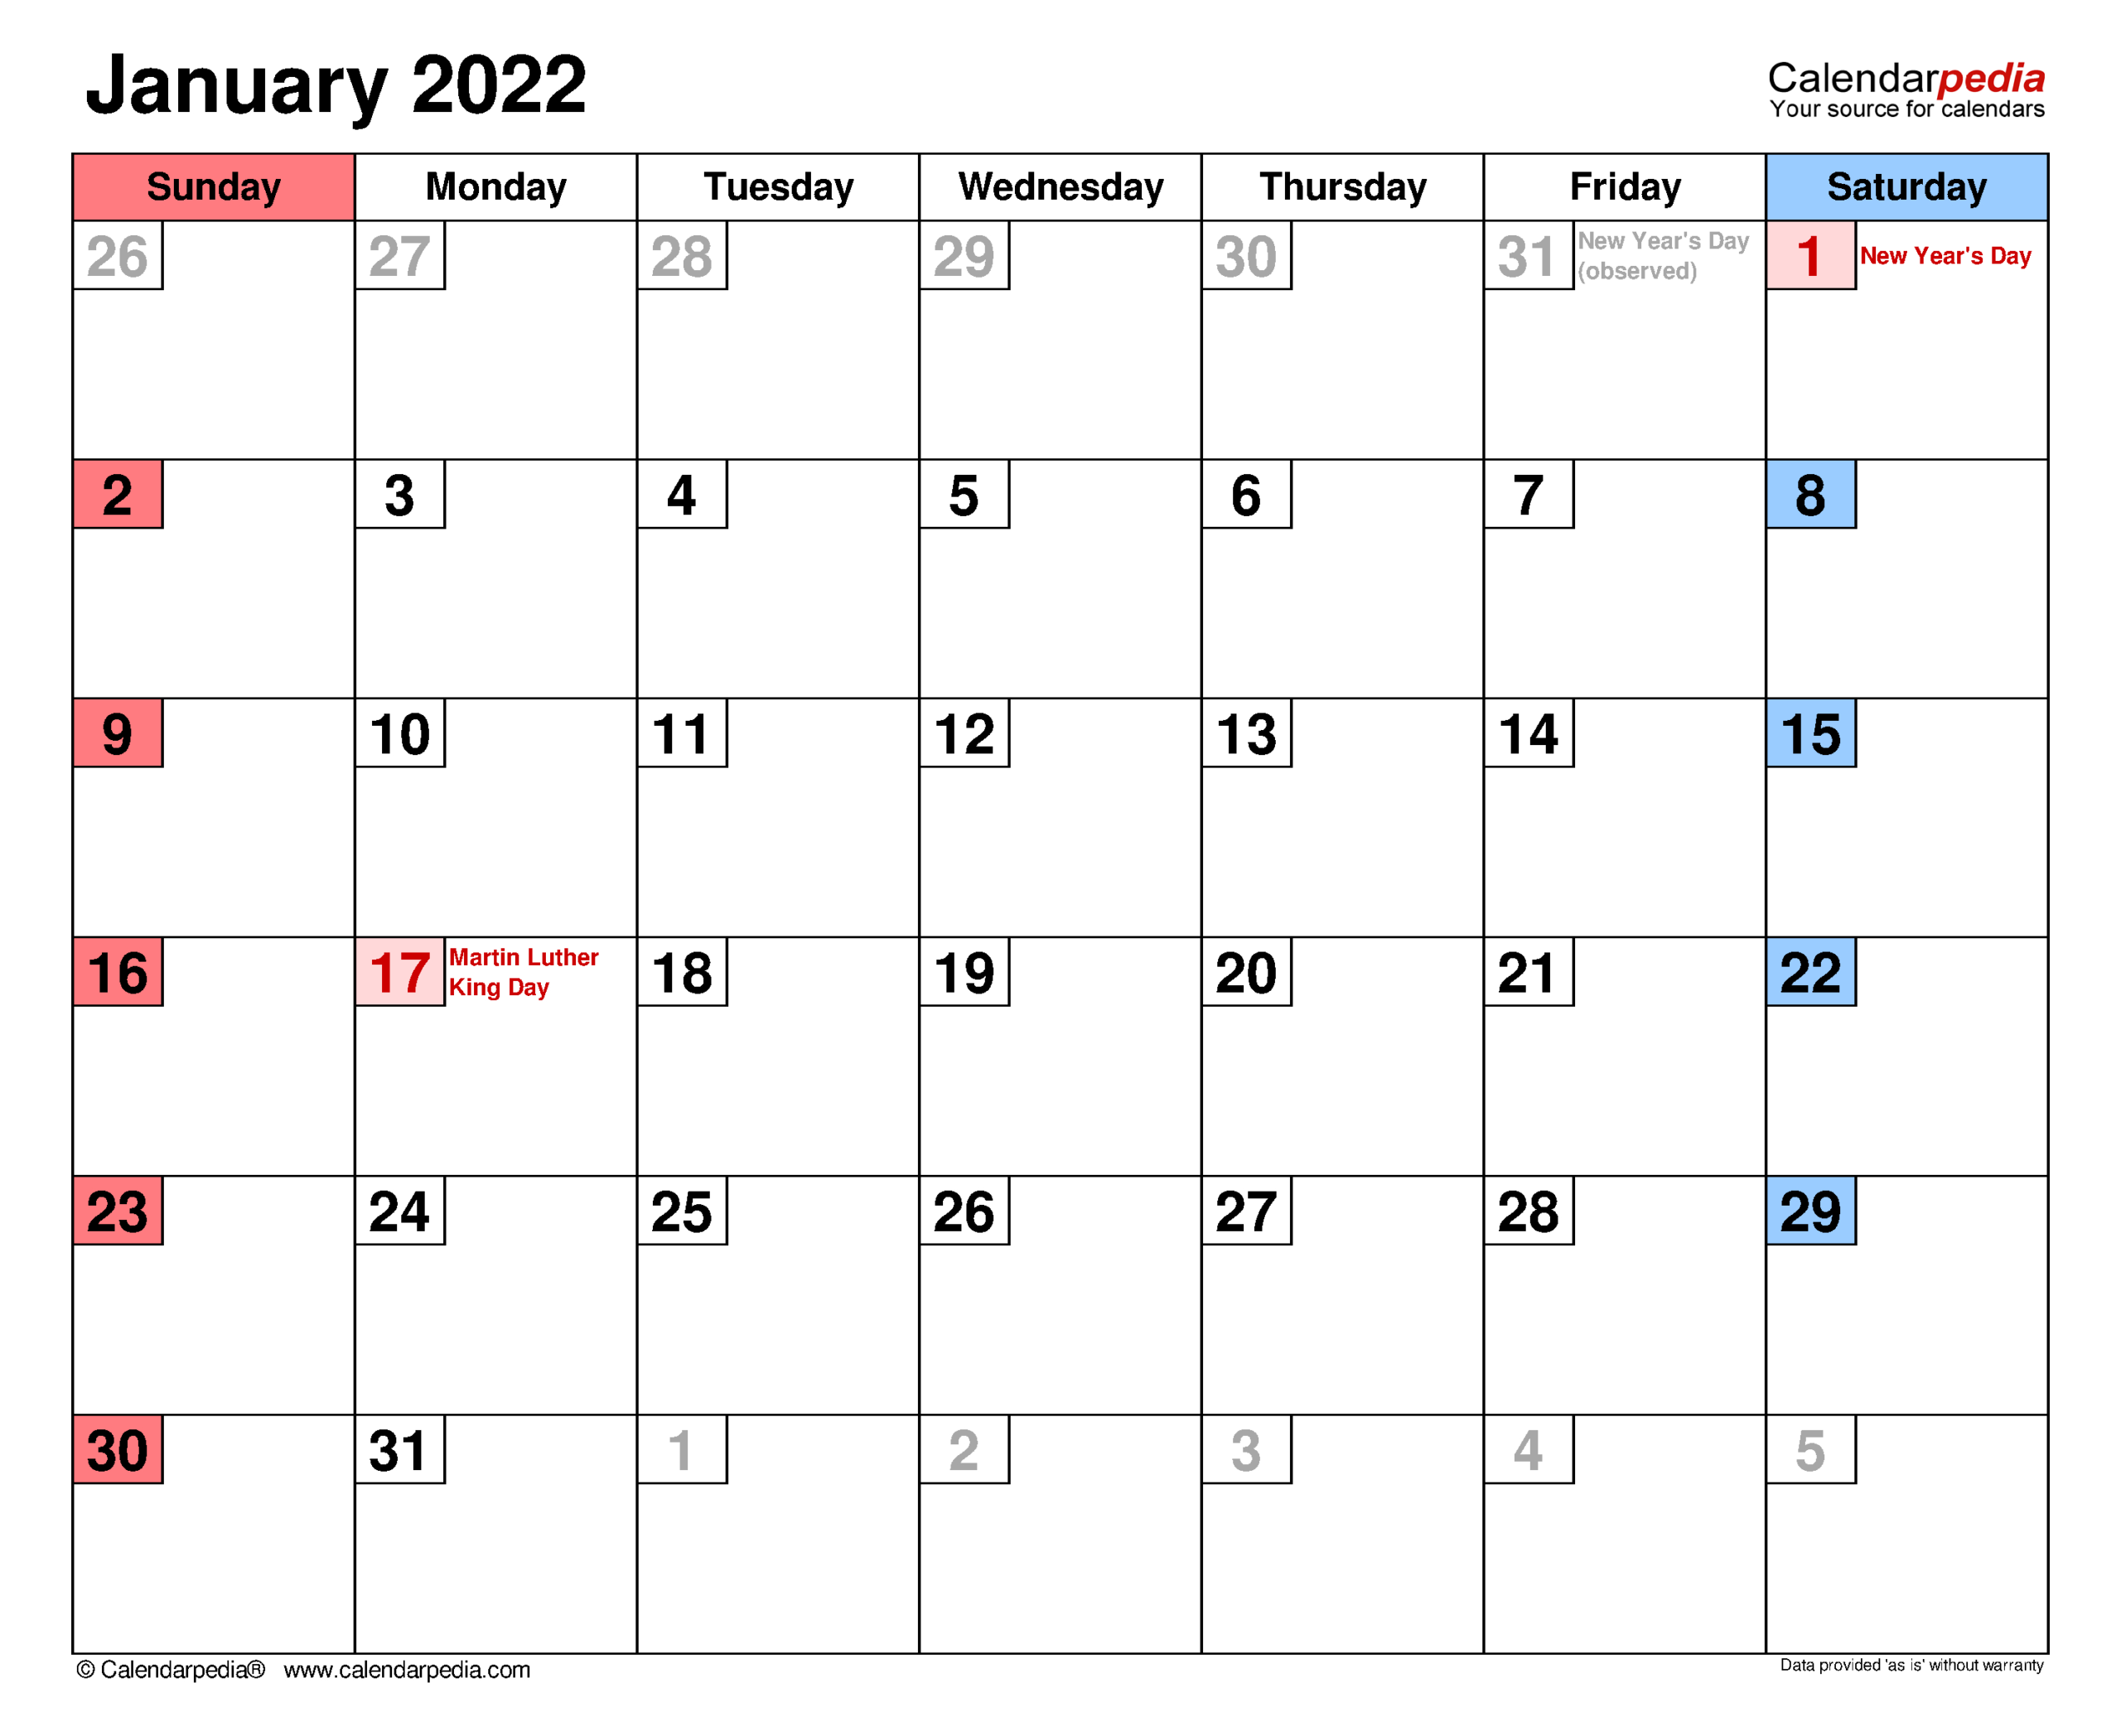 January 2022 Calendar | Templates For Word, Excel And Pdf  December 2022 January 2022 February 2022 Calendar